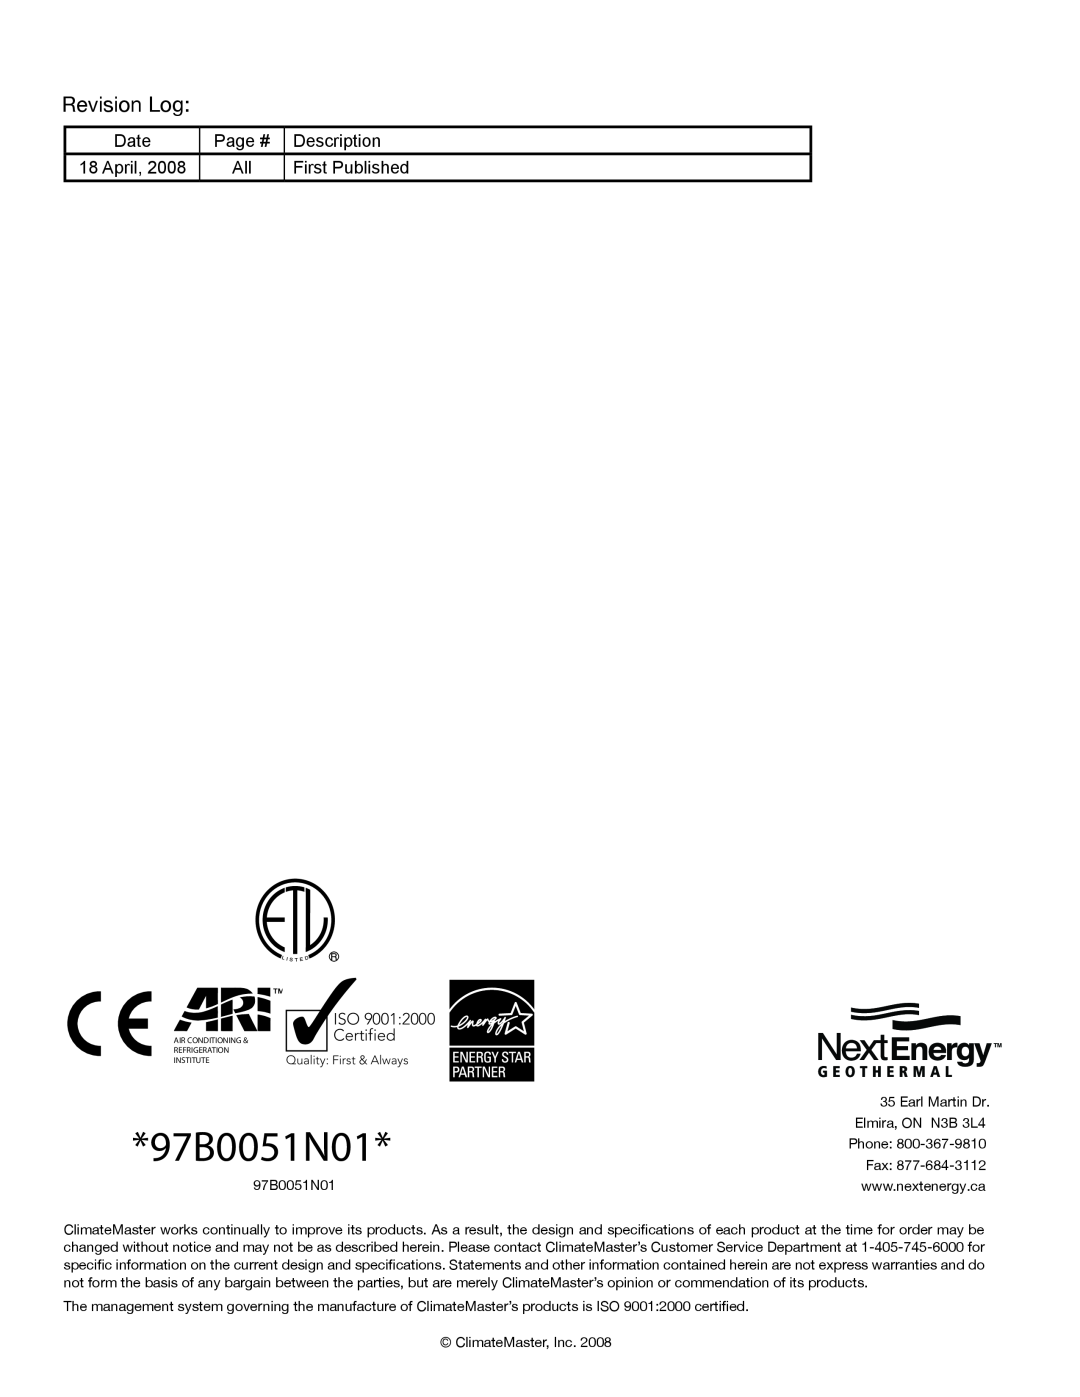 Toshiba TRANQUILITY 27, TRANQUILITY 20 manual 97B0051N01, Revision Log 